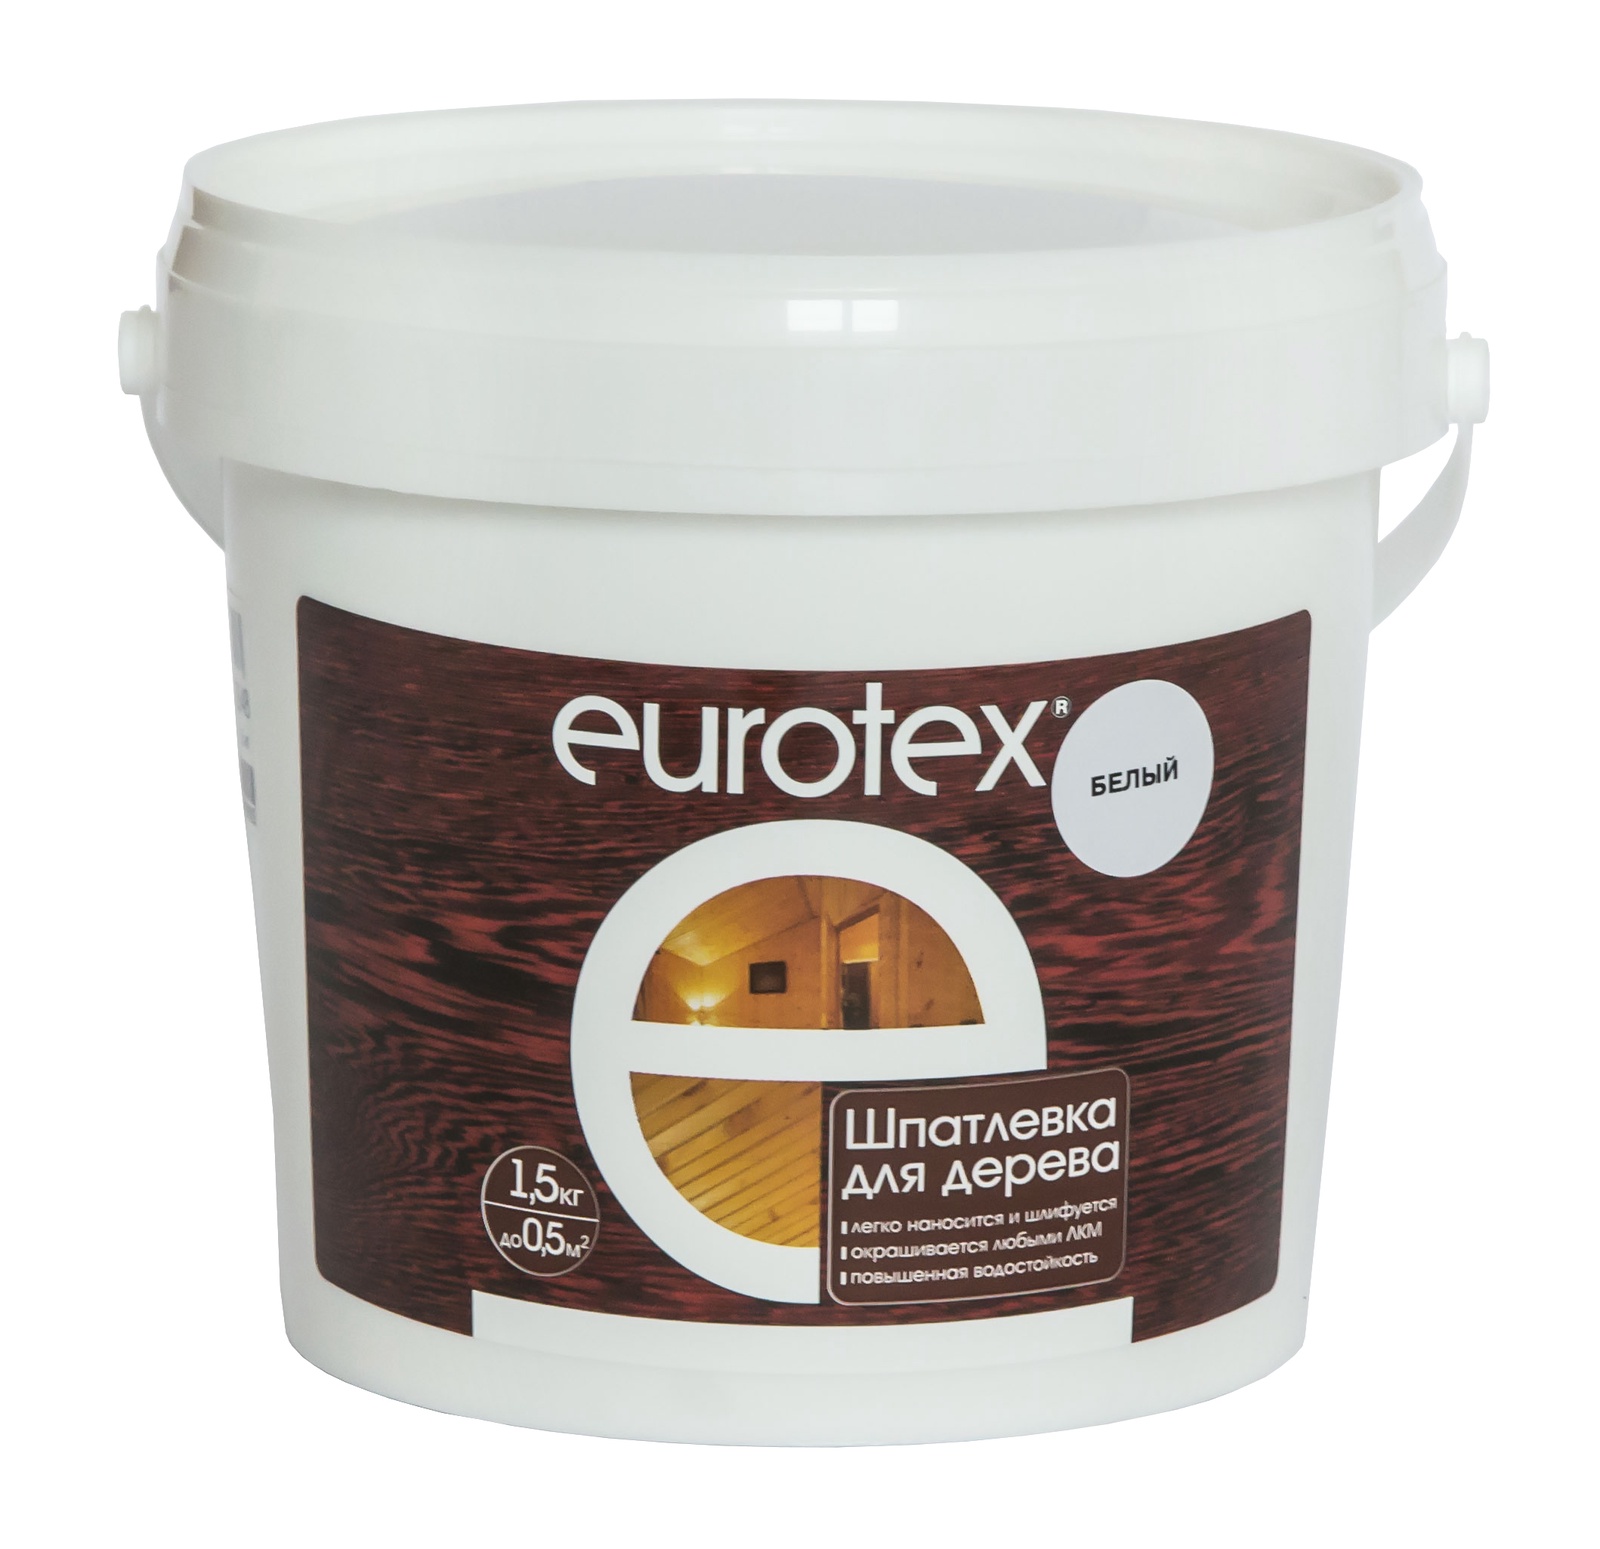 фото Шпатлевка для дерева EUROTEX, 1.5 кг, сосна